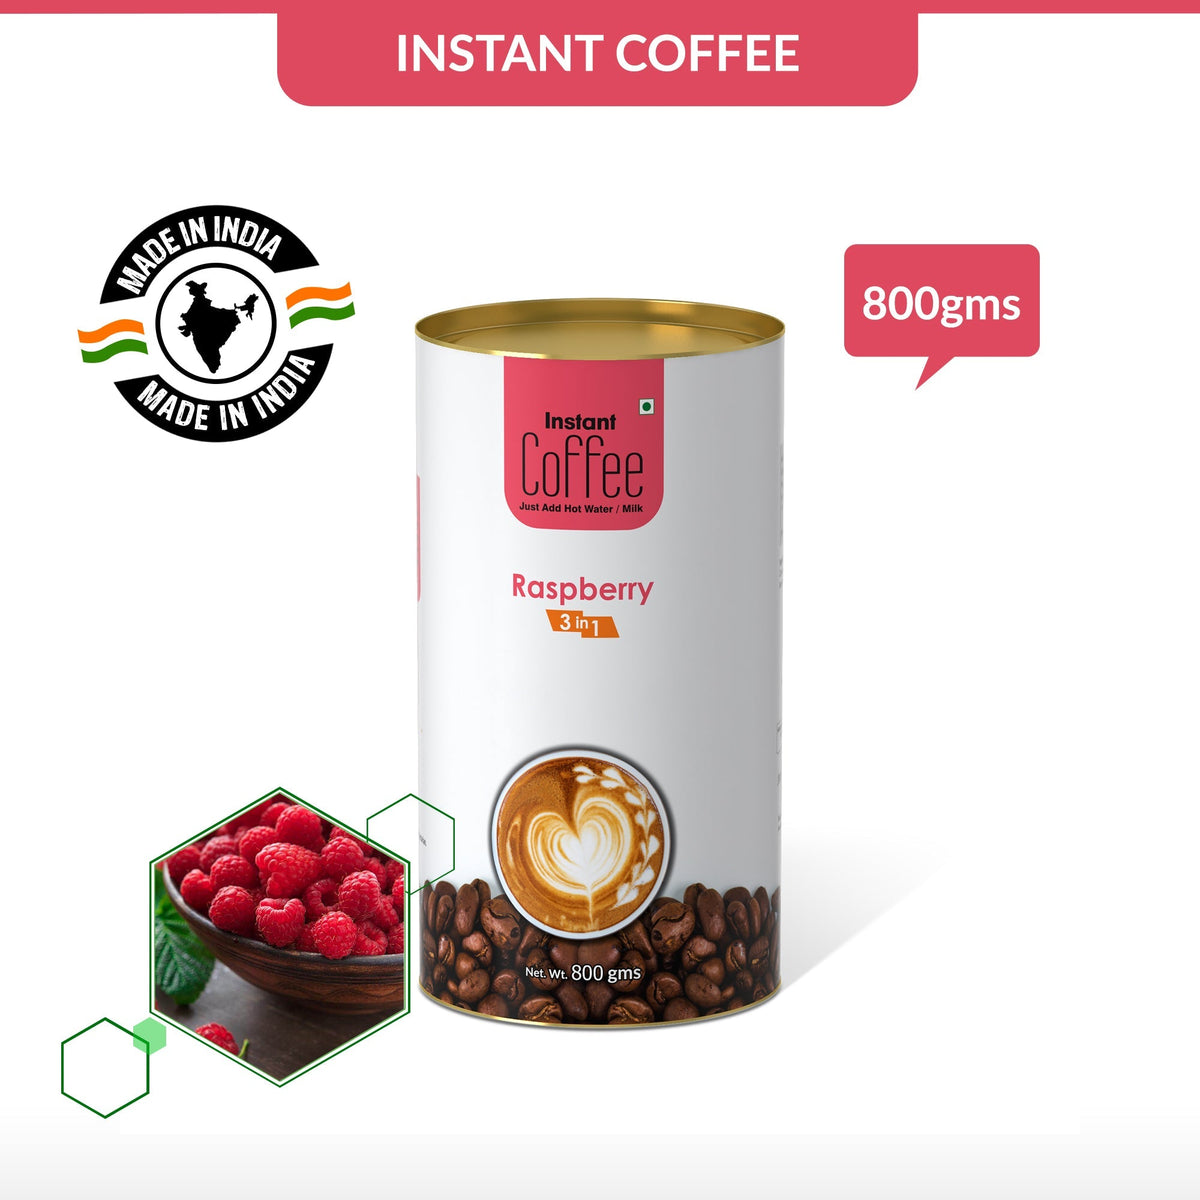 Raspberry Instant Coffee Premix (3 in 1) - 800 gms